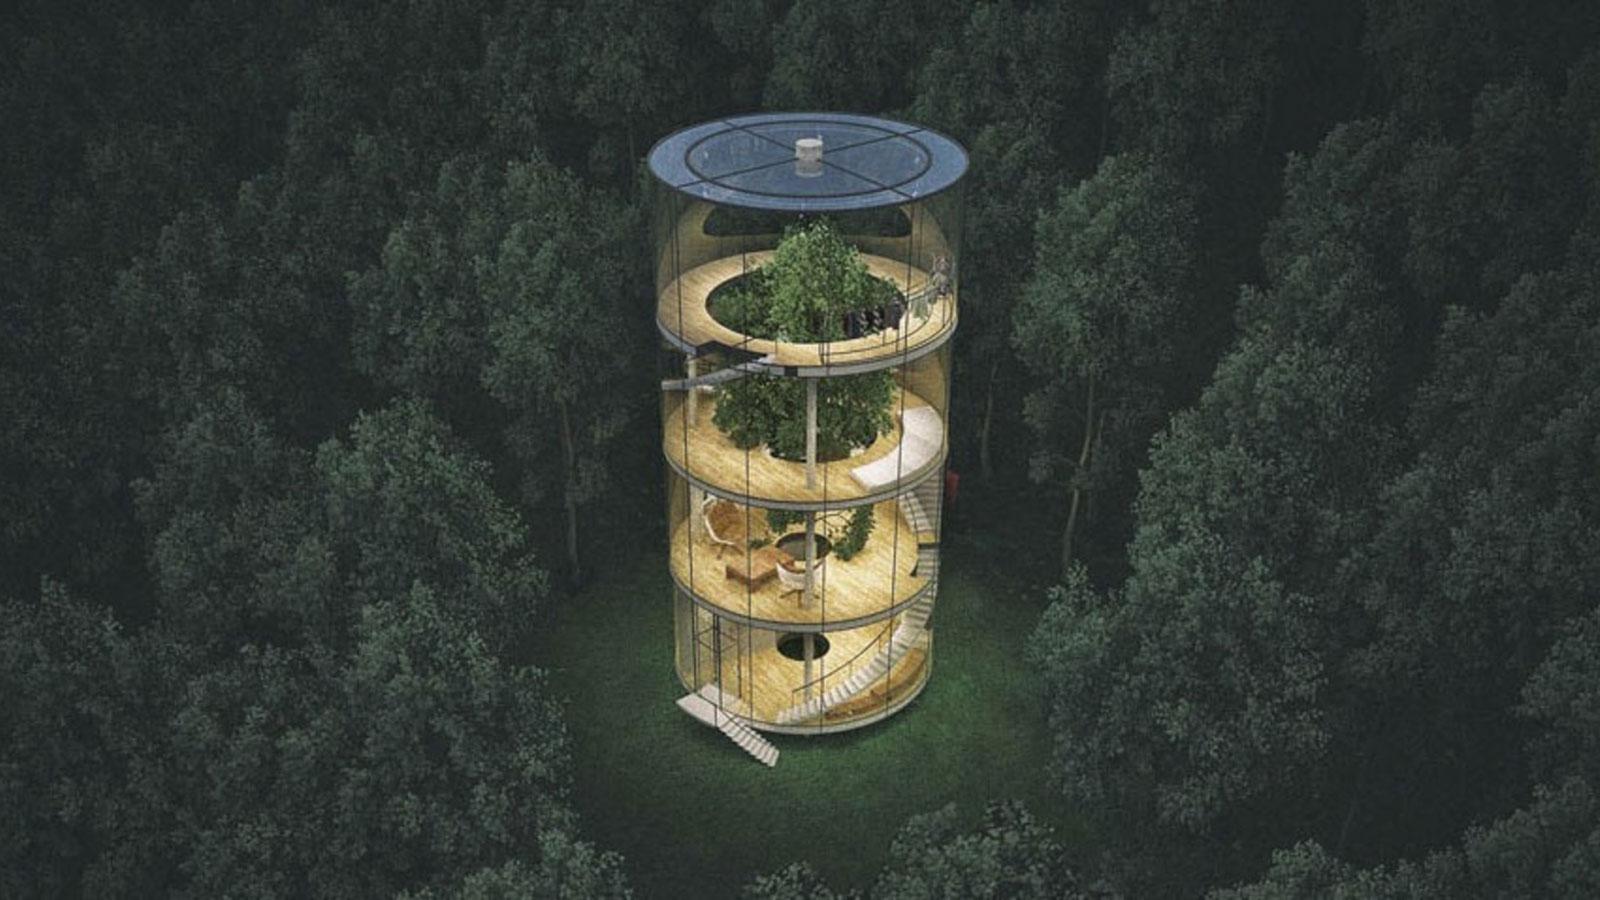 THE TUBULAR TREE HOUSE BY AIBEK ALMASSOV